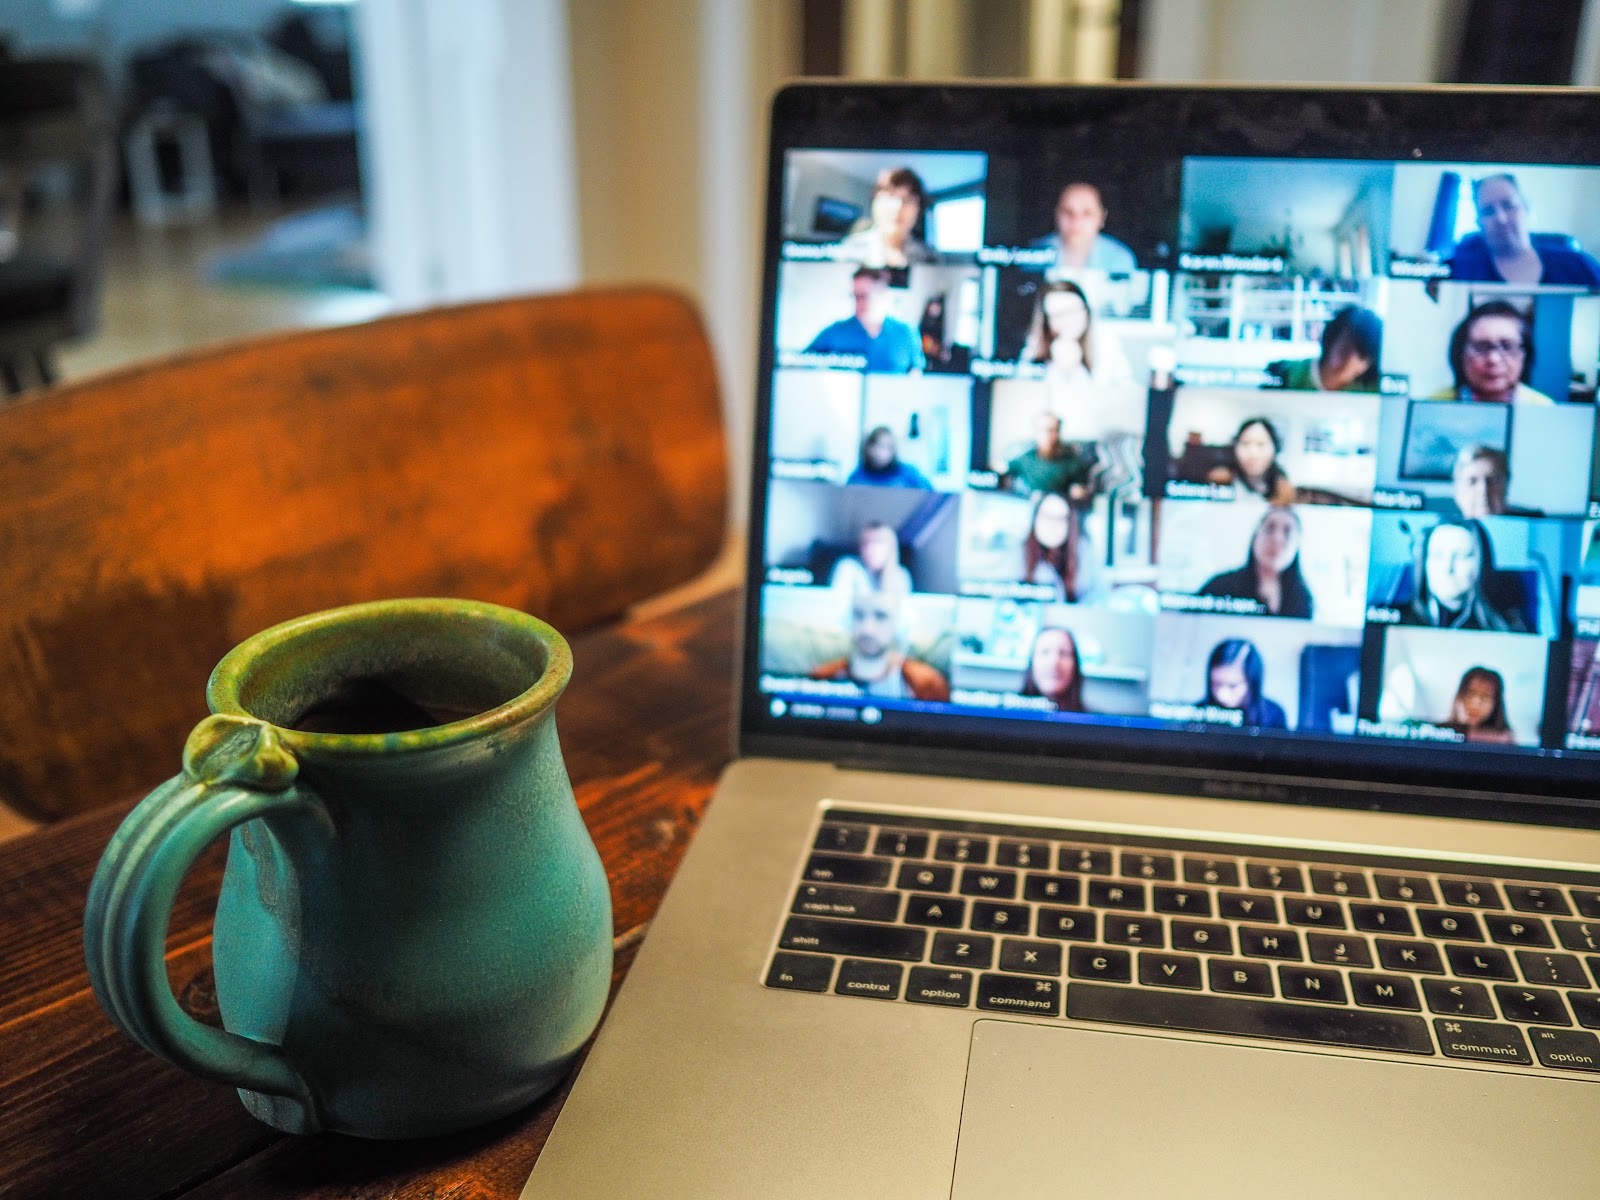 Zoom meeting on laptop coffee mug eLearning